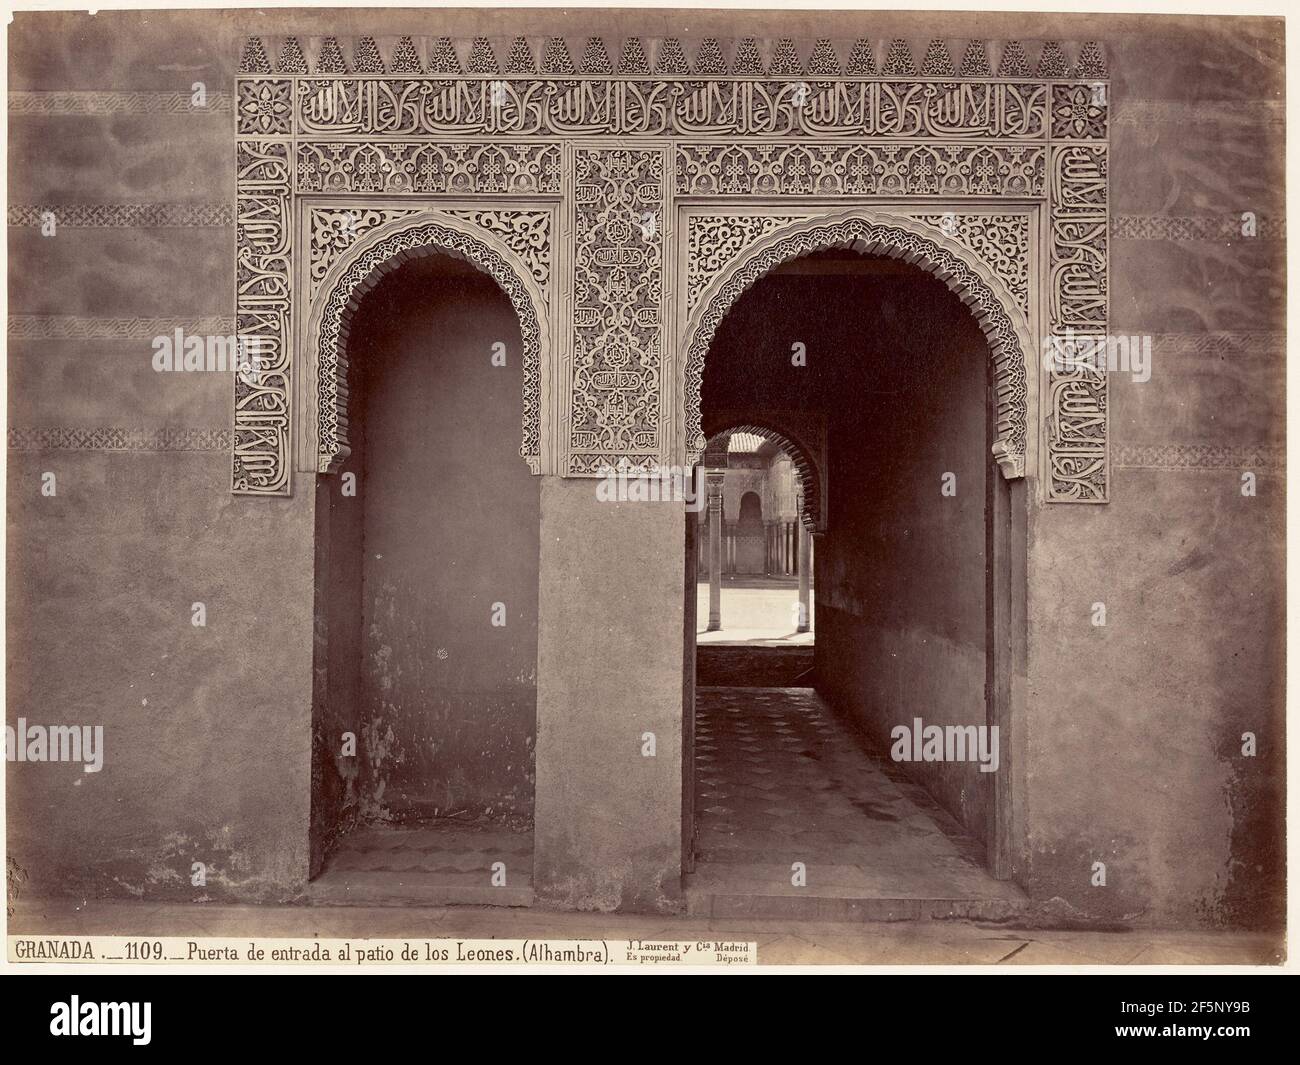 Puerta de entrada al patio de los leones, Alhambra, Granada. Juan Laurent (French, 1816 - 1886) Stock Photo